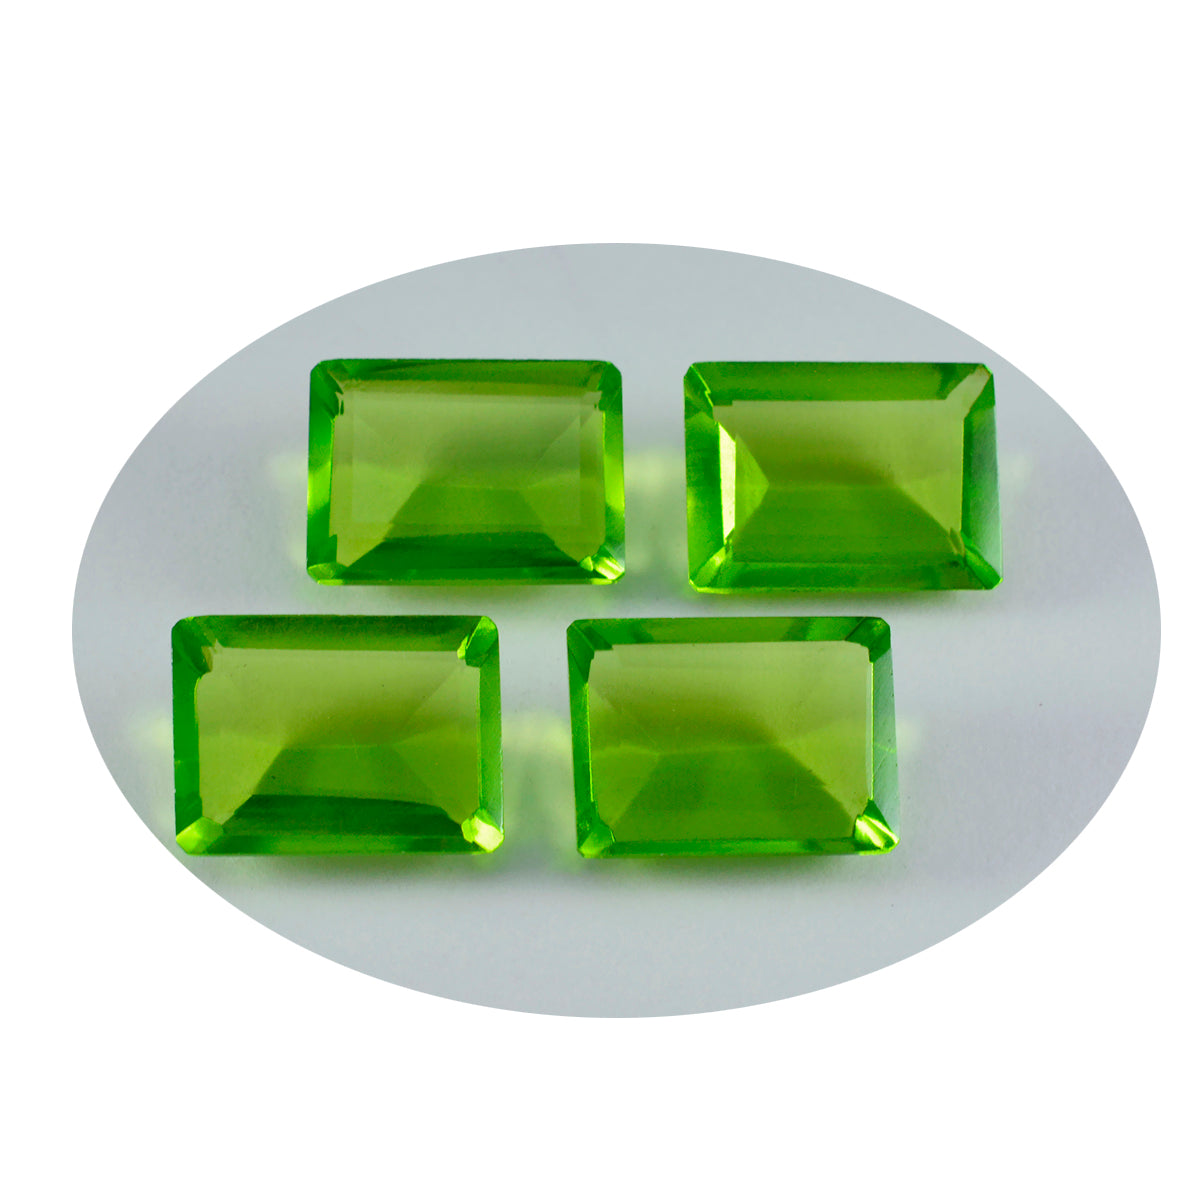 riyogems 1 st grön peridot cz fasetterad 12x16 mm oktagonform fantastisk kvalitetspärla